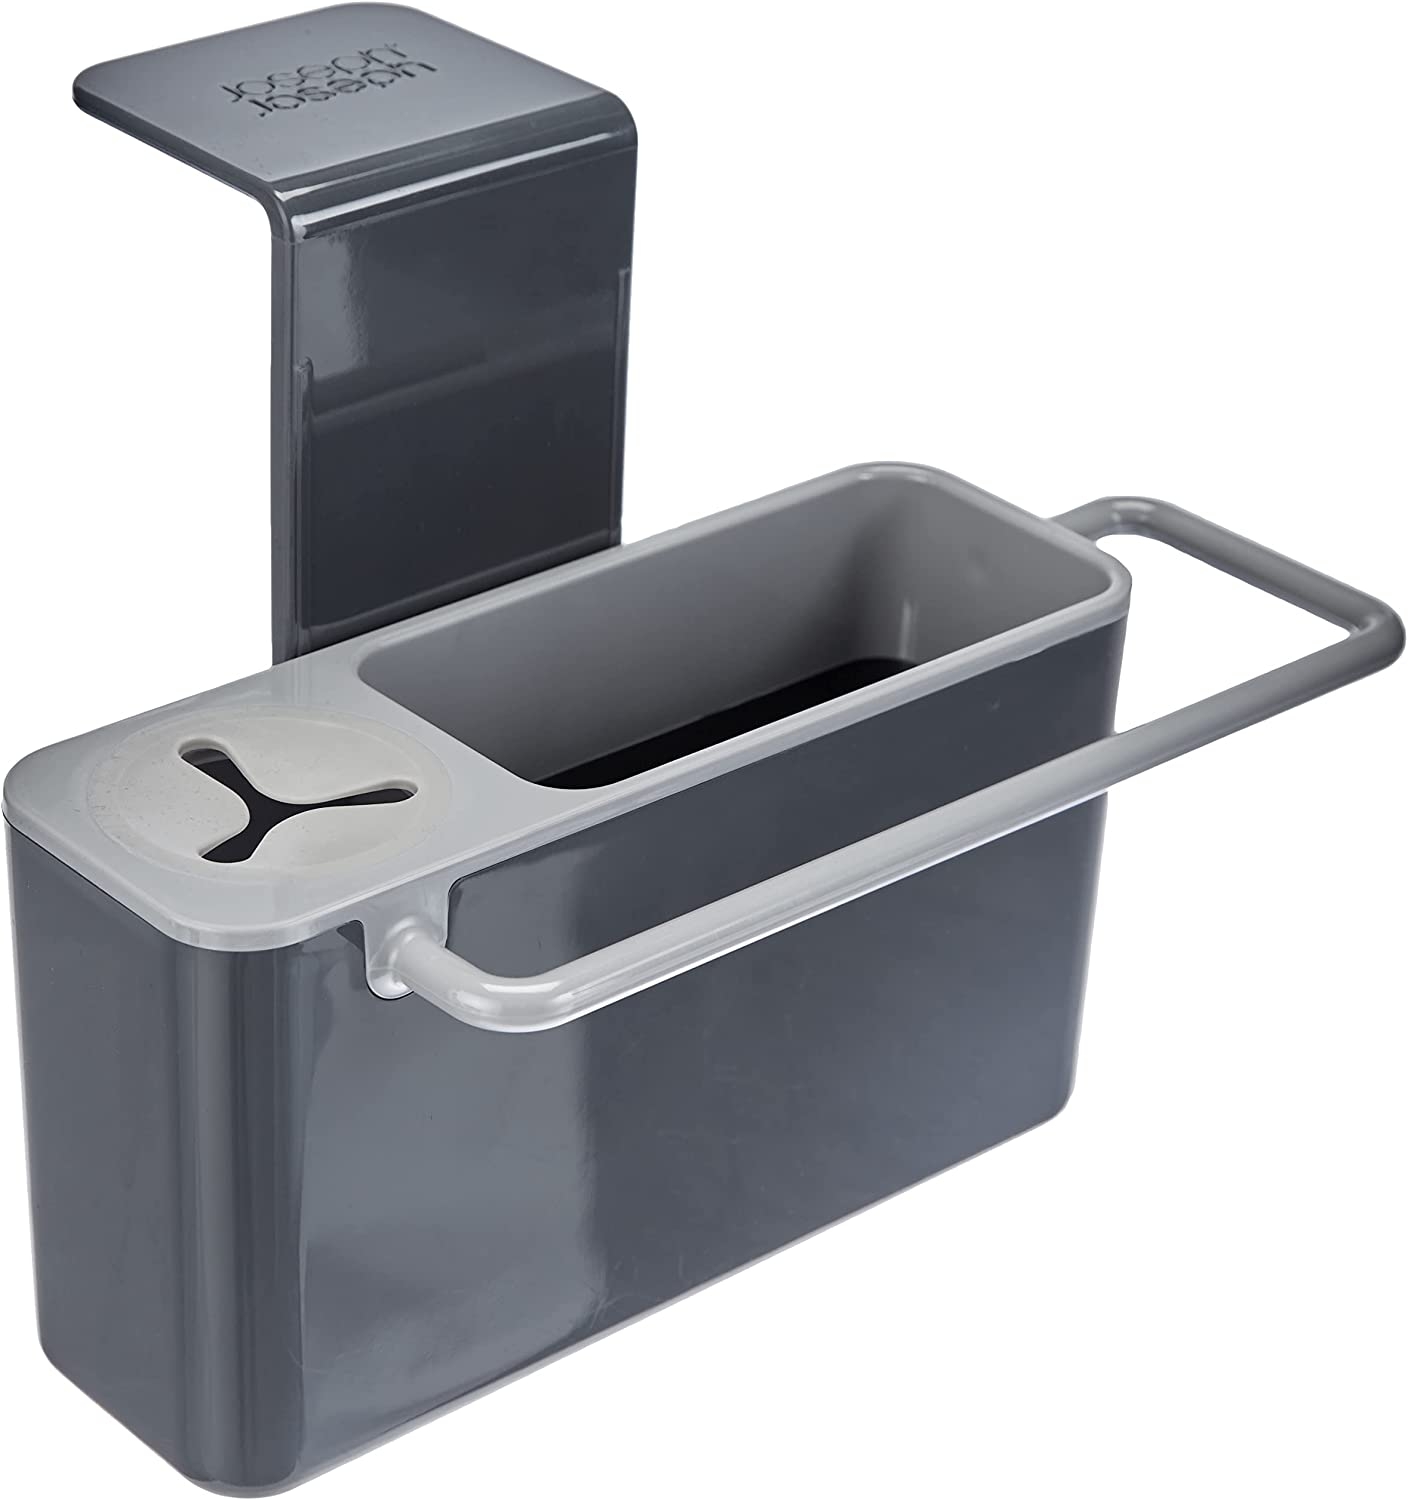 Joseph Joseph 85024 Sink Aid Self-Draining Sink Caddy, Gray Import To Shop ×Product customization General Description Gallery